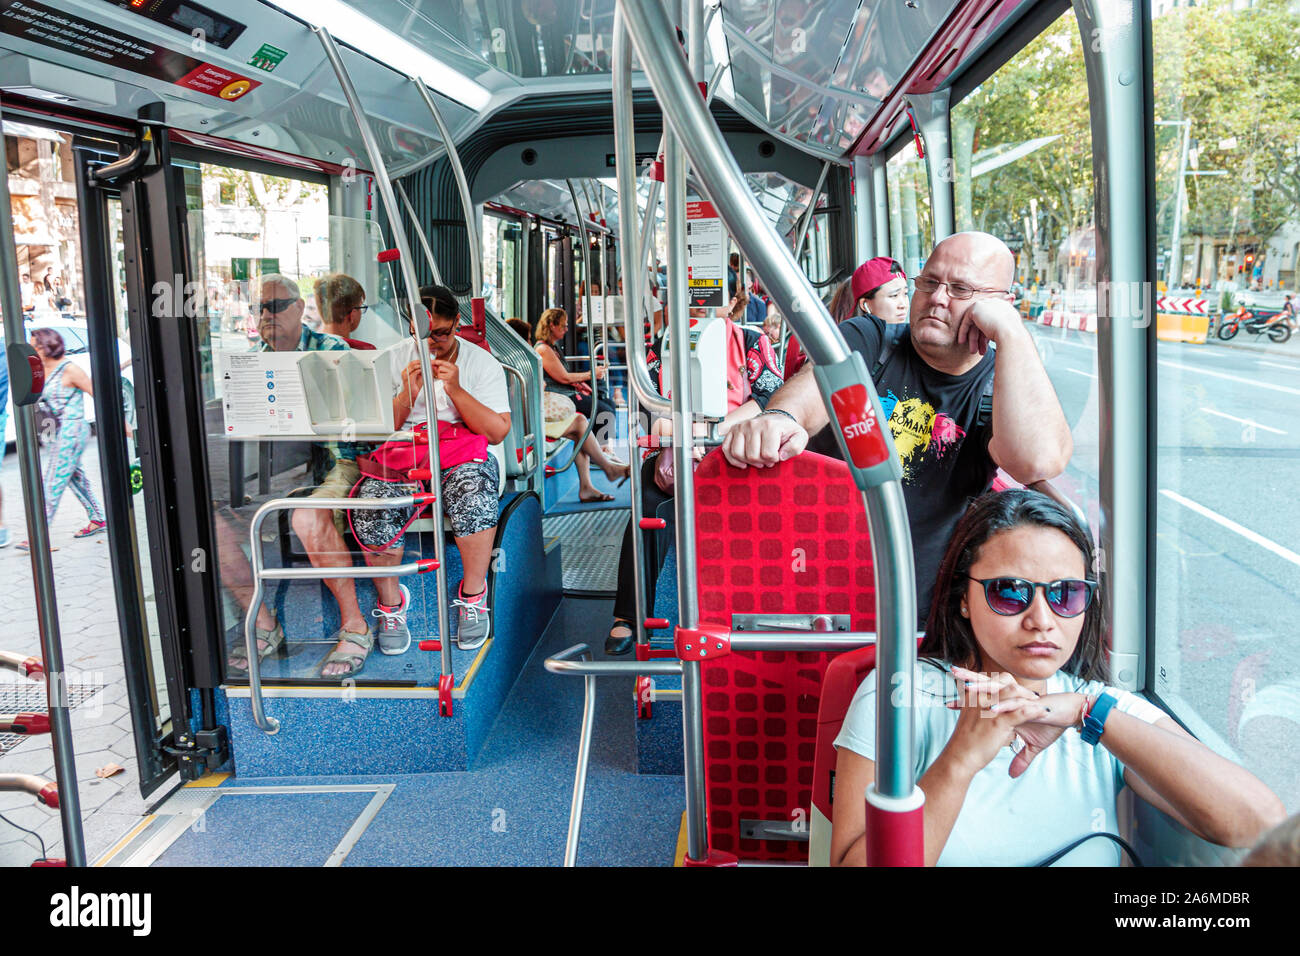 Barcelona Spain,Catalonia bus,Transports Metropolitans de Barcelona,TMB,inside,passengers riders commuters,sitting,woman,man,boy,Hispanic,Eurozone,ES1 Stock Photo